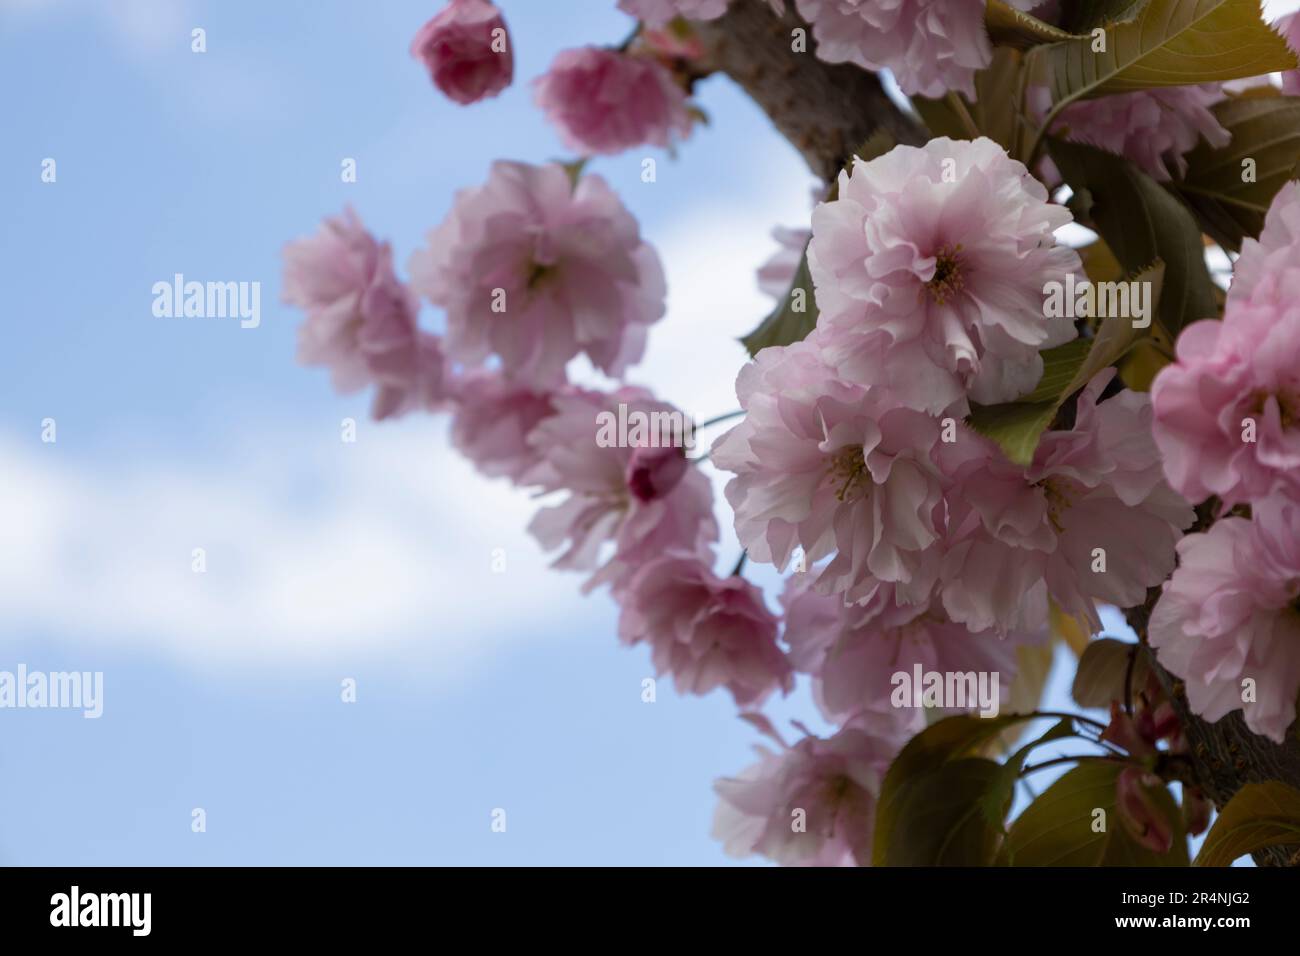 The beautiful spring pink sakura flowers against background. The blooming sakura flowers on branch. Stock Photo